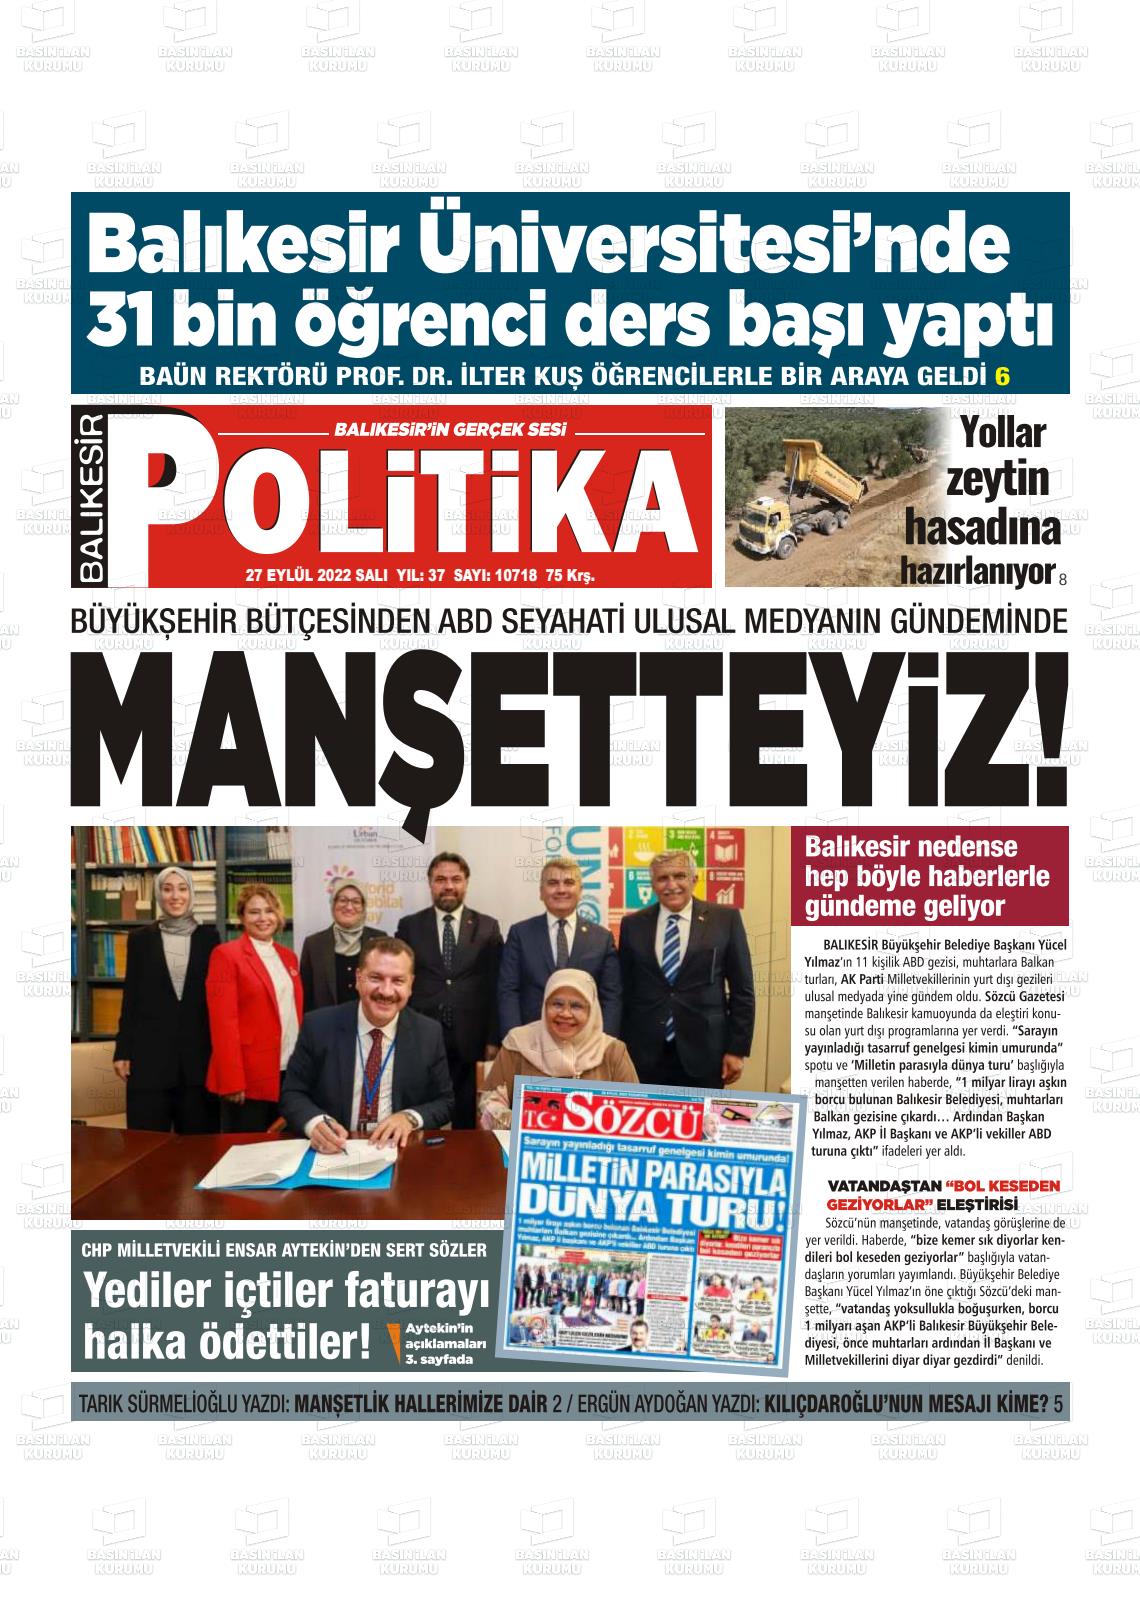 27 Eylül 2022 Balıkesir Politika Gazete Manşeti